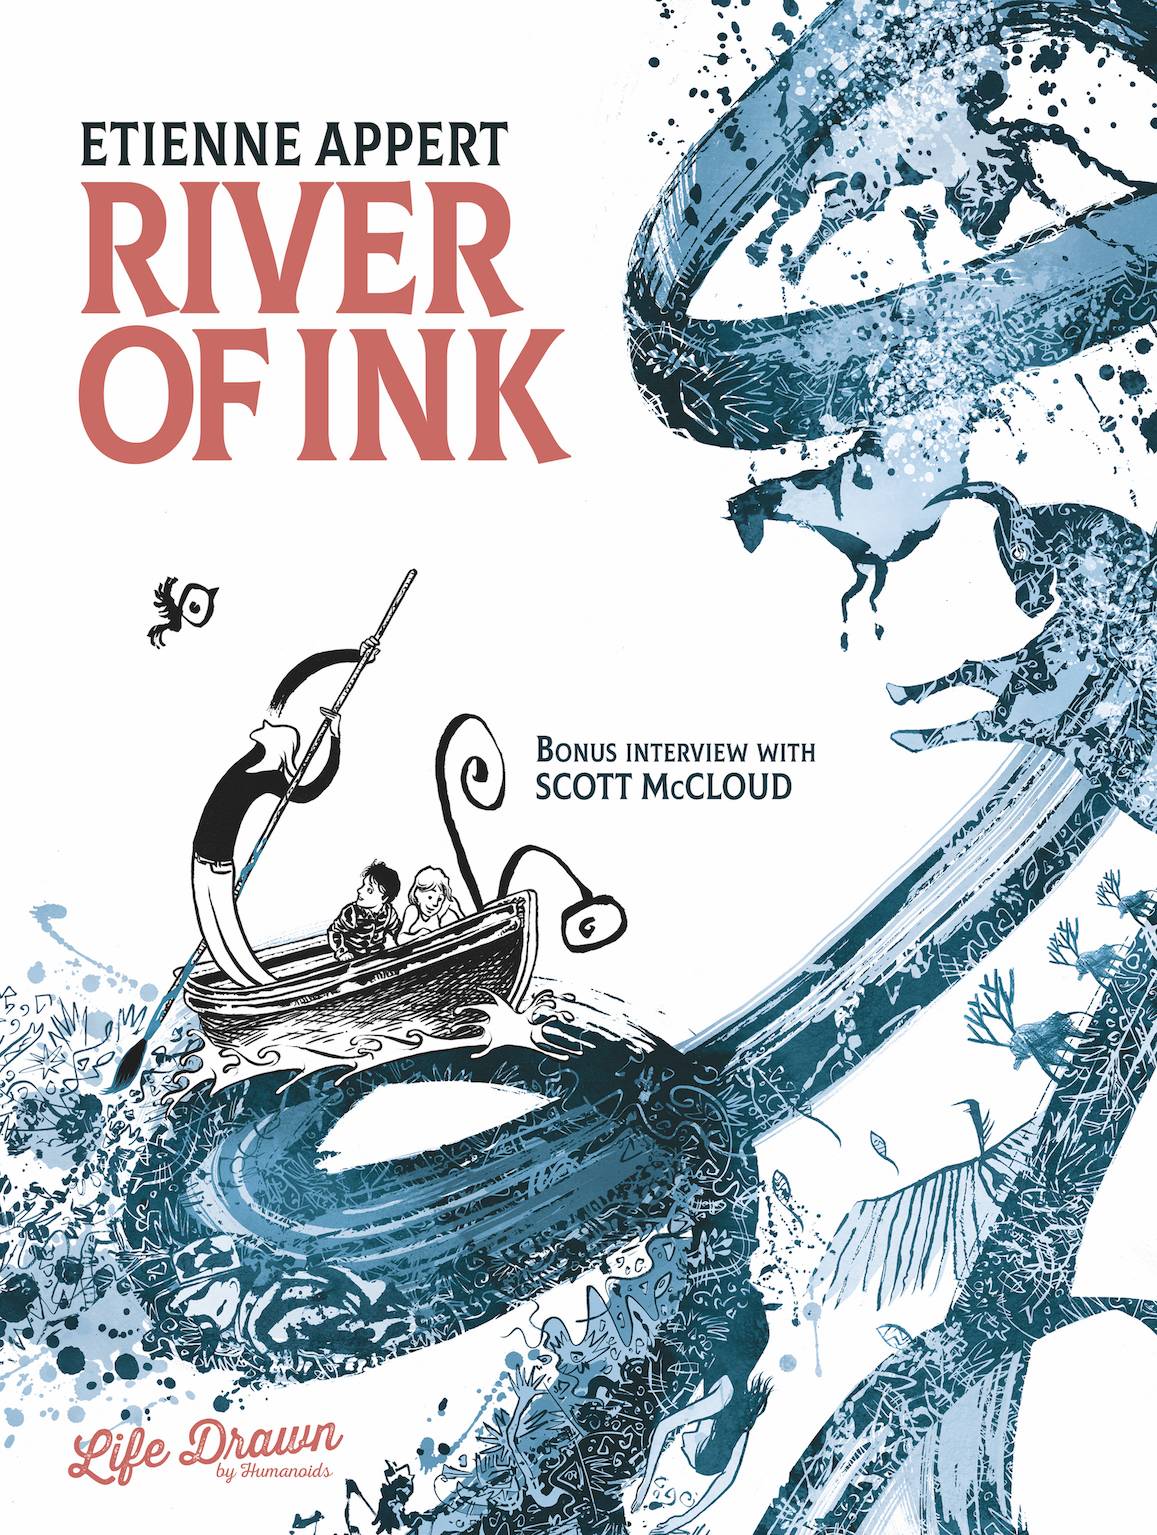 River of Ink Graphic Novel